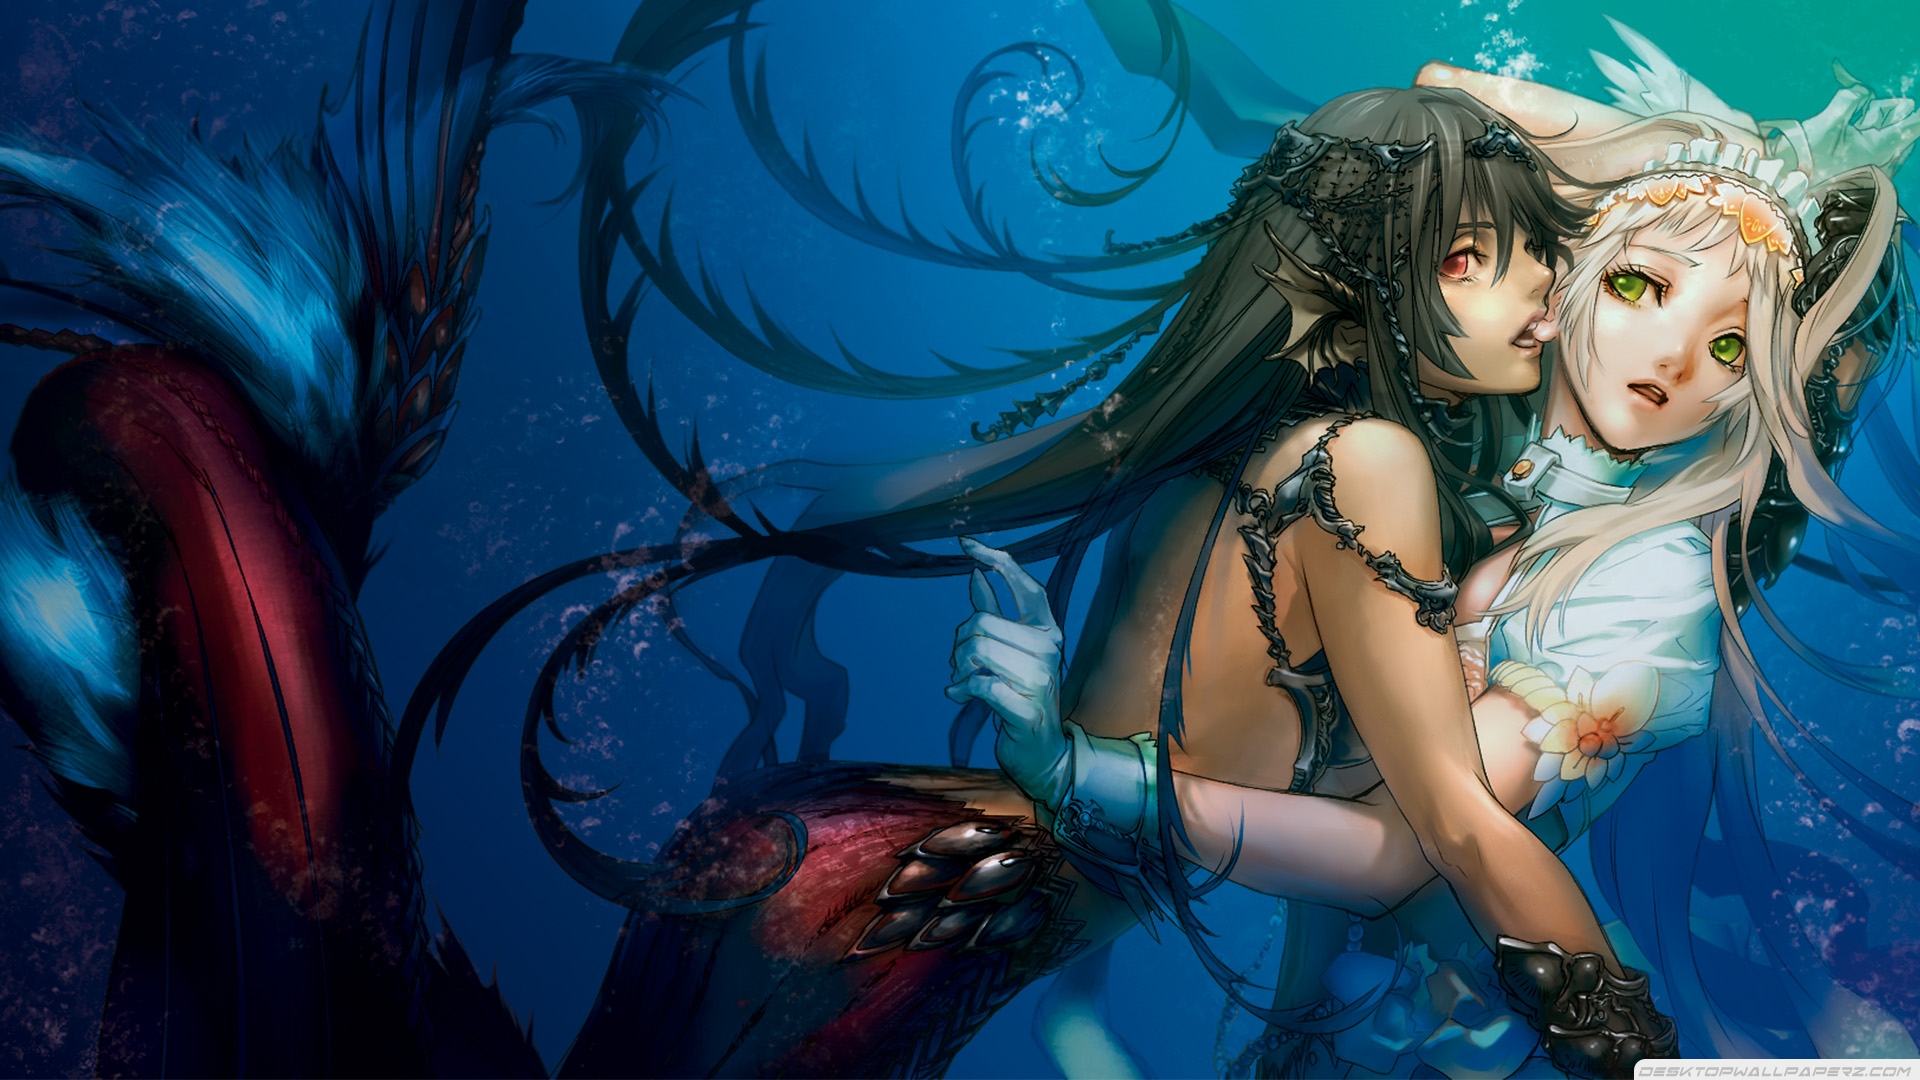 Black Long Hair Mermaids Anime Girls Underwater Fantasy Art 19201080